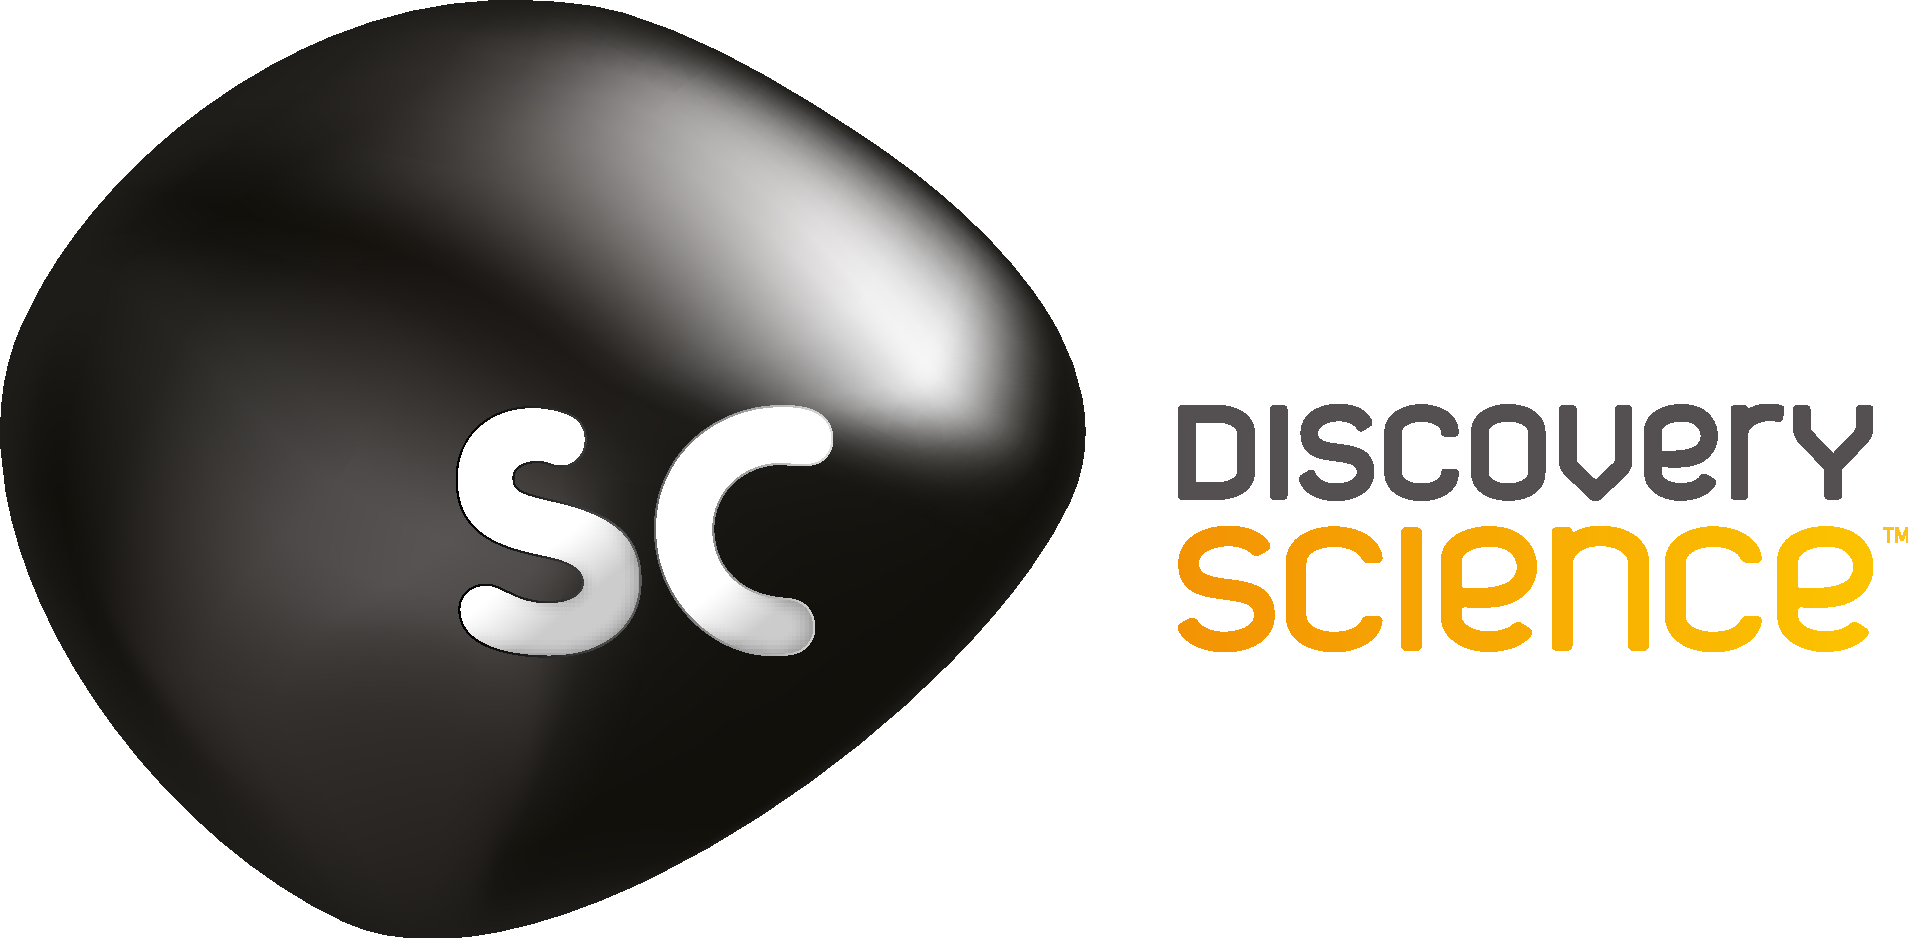 Discovering files. Логотипы телеканалов Discovery Science. Discovery Science логотип.